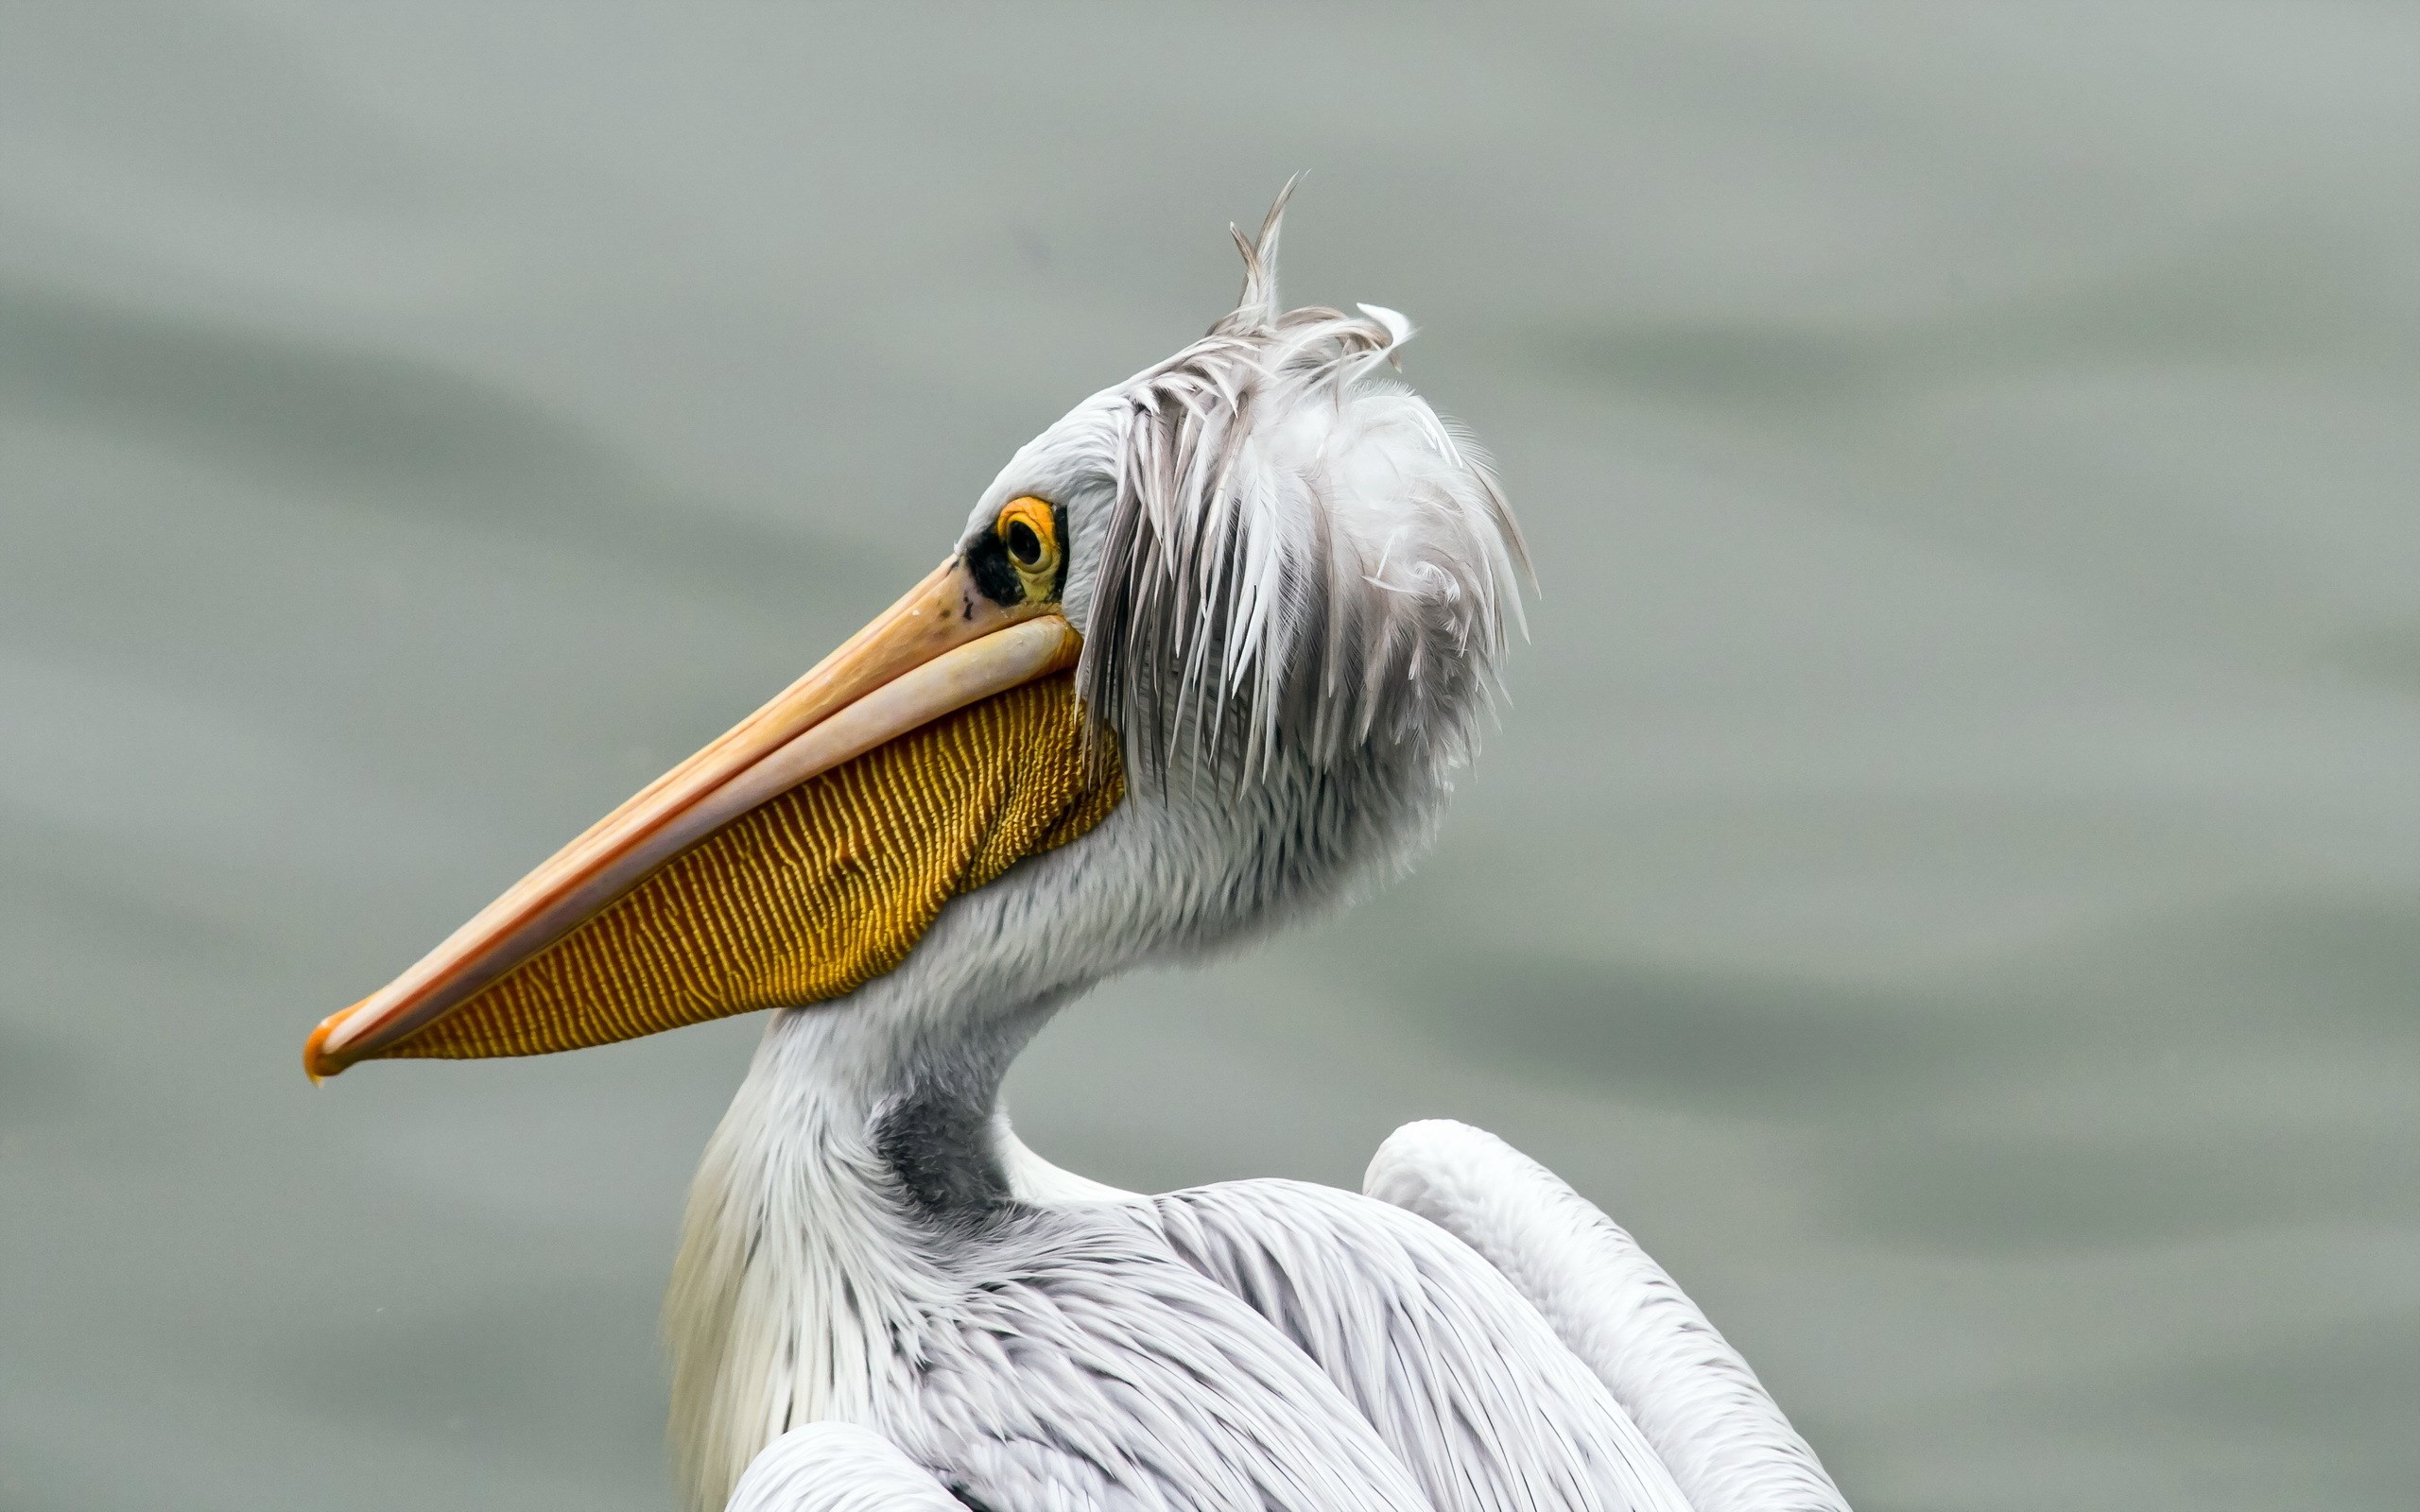 Pelican Bird Beak